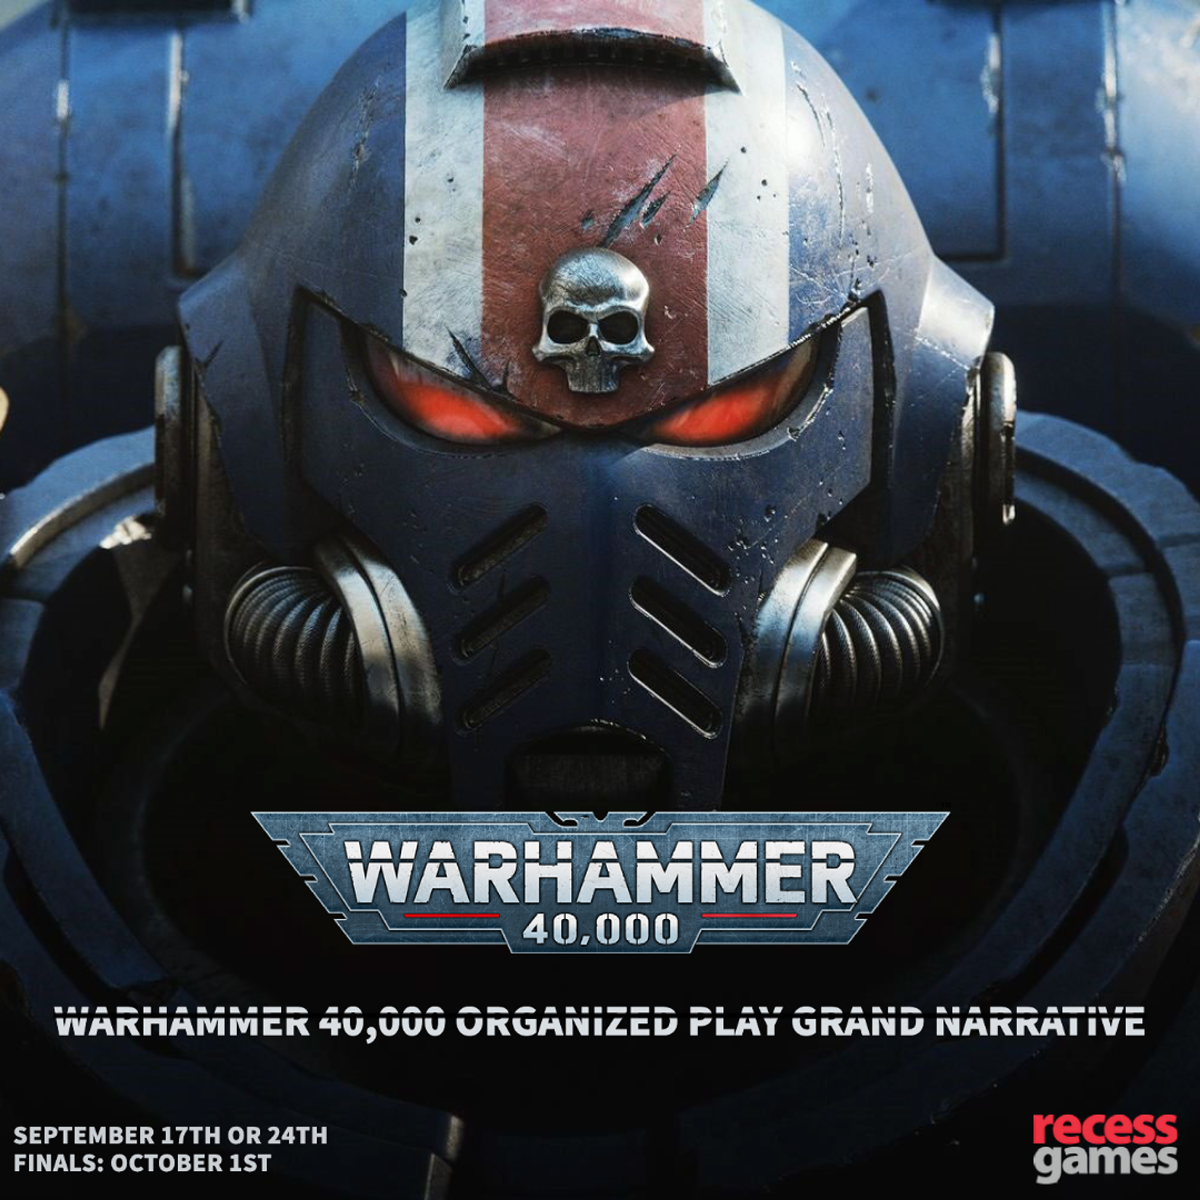 Warhammer 40,000 Organized Play Grand Narrative